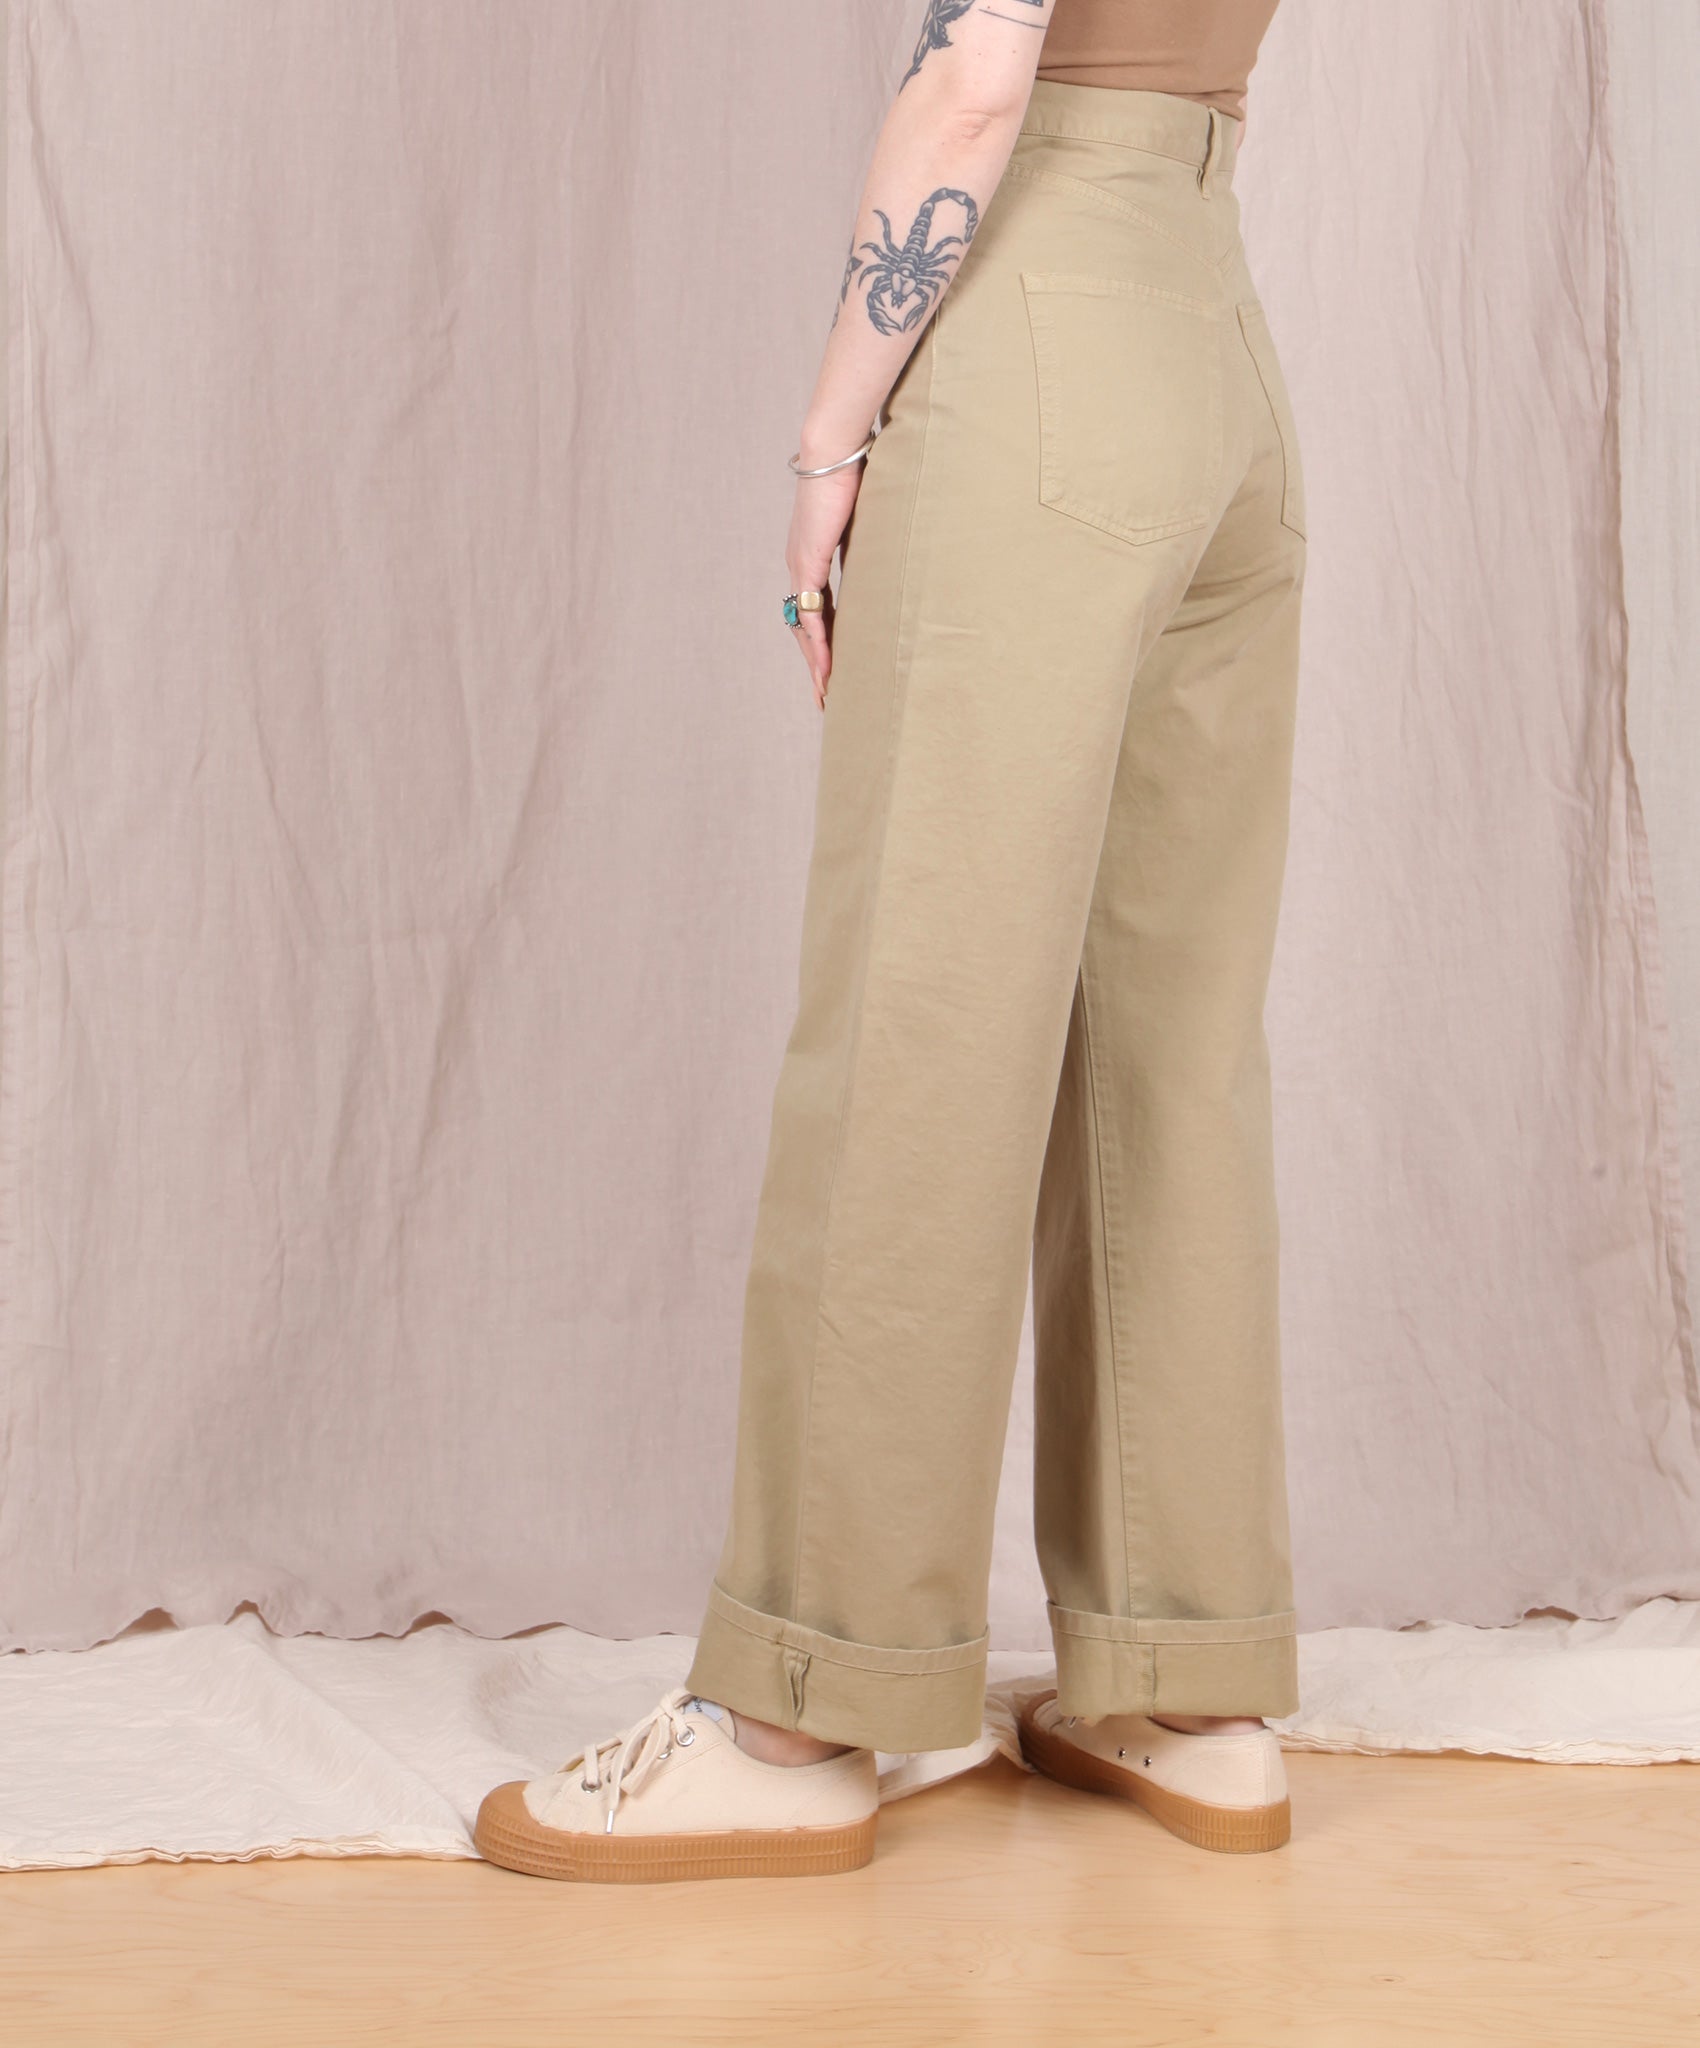 Rita Row-Casilda Jeans